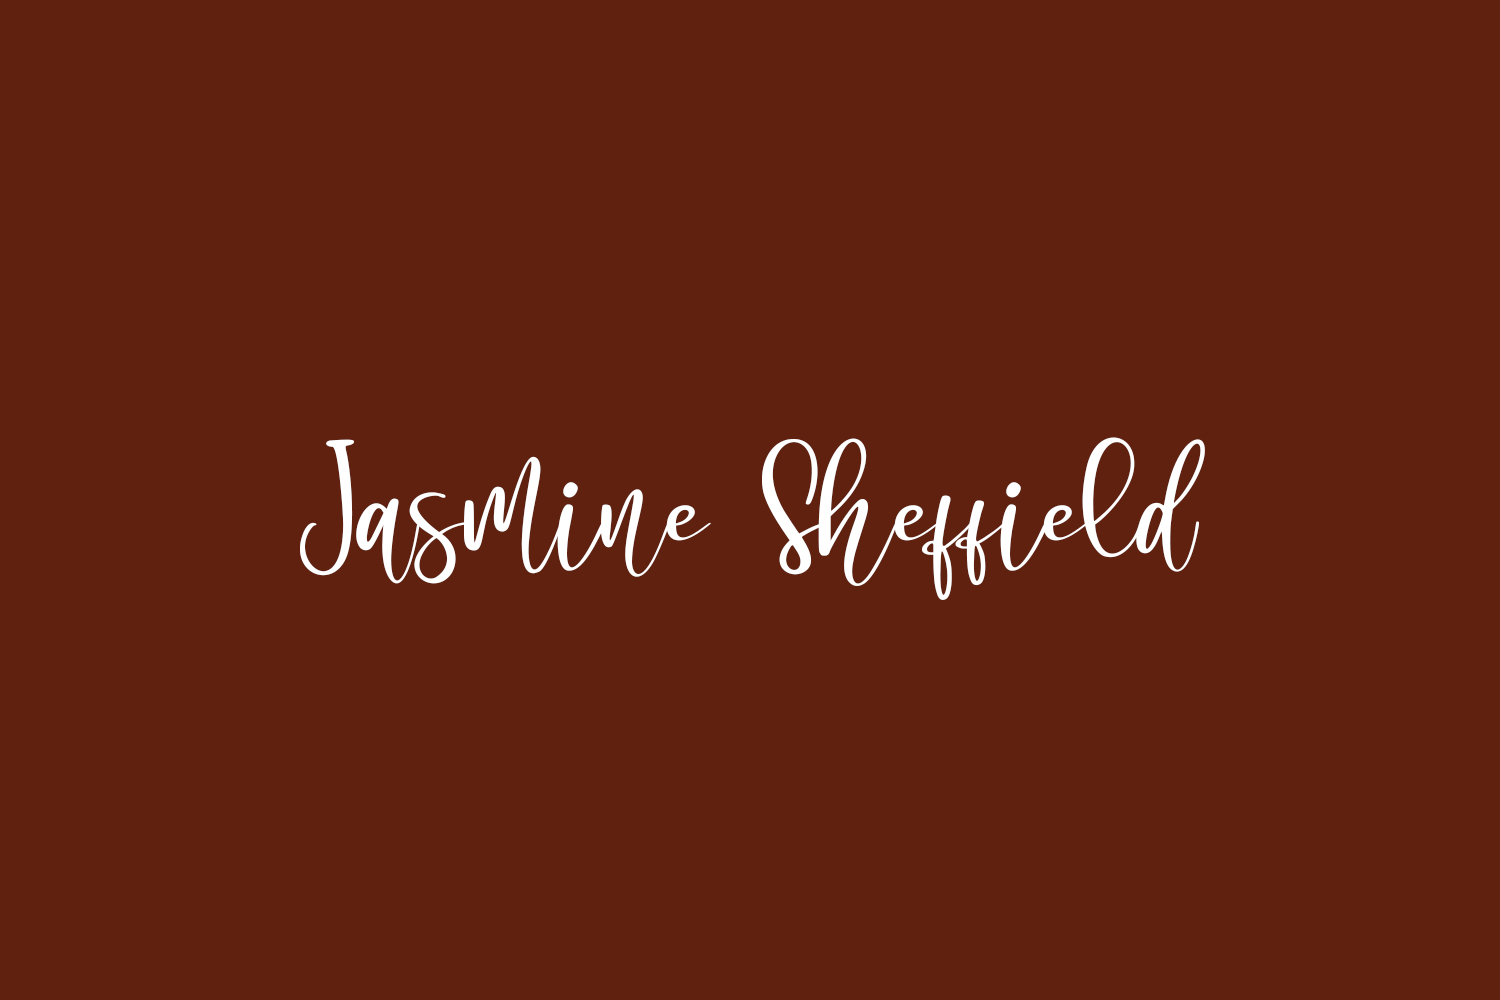 Jasmine Sheffield Free Font